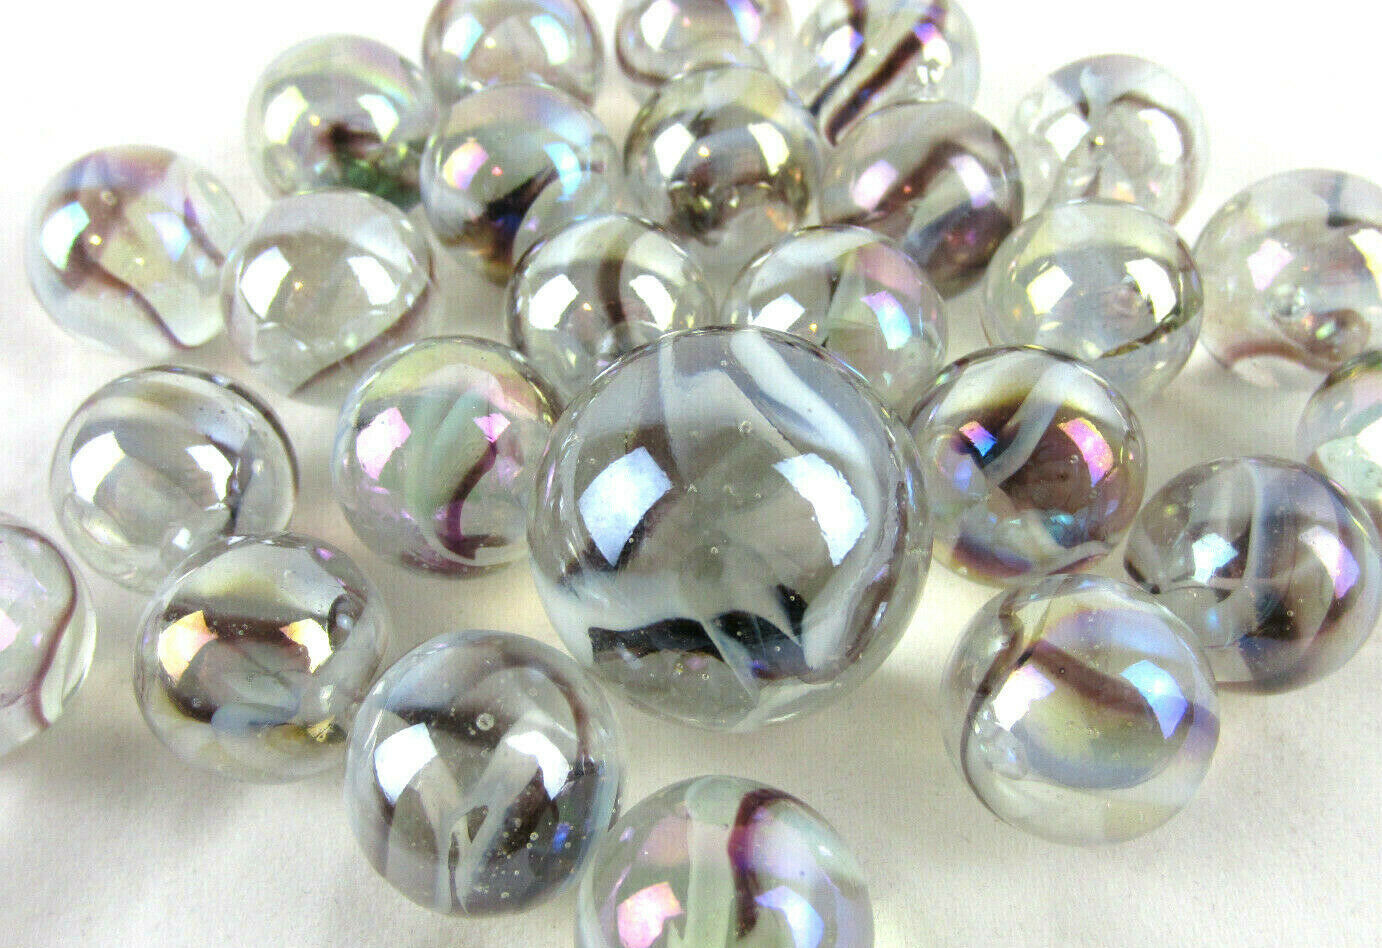 25 Glass Marbles POLAR BEAR Translucent Brown/White Game Pack Shooter Swirl Mega Marble 77356 - фотография #4